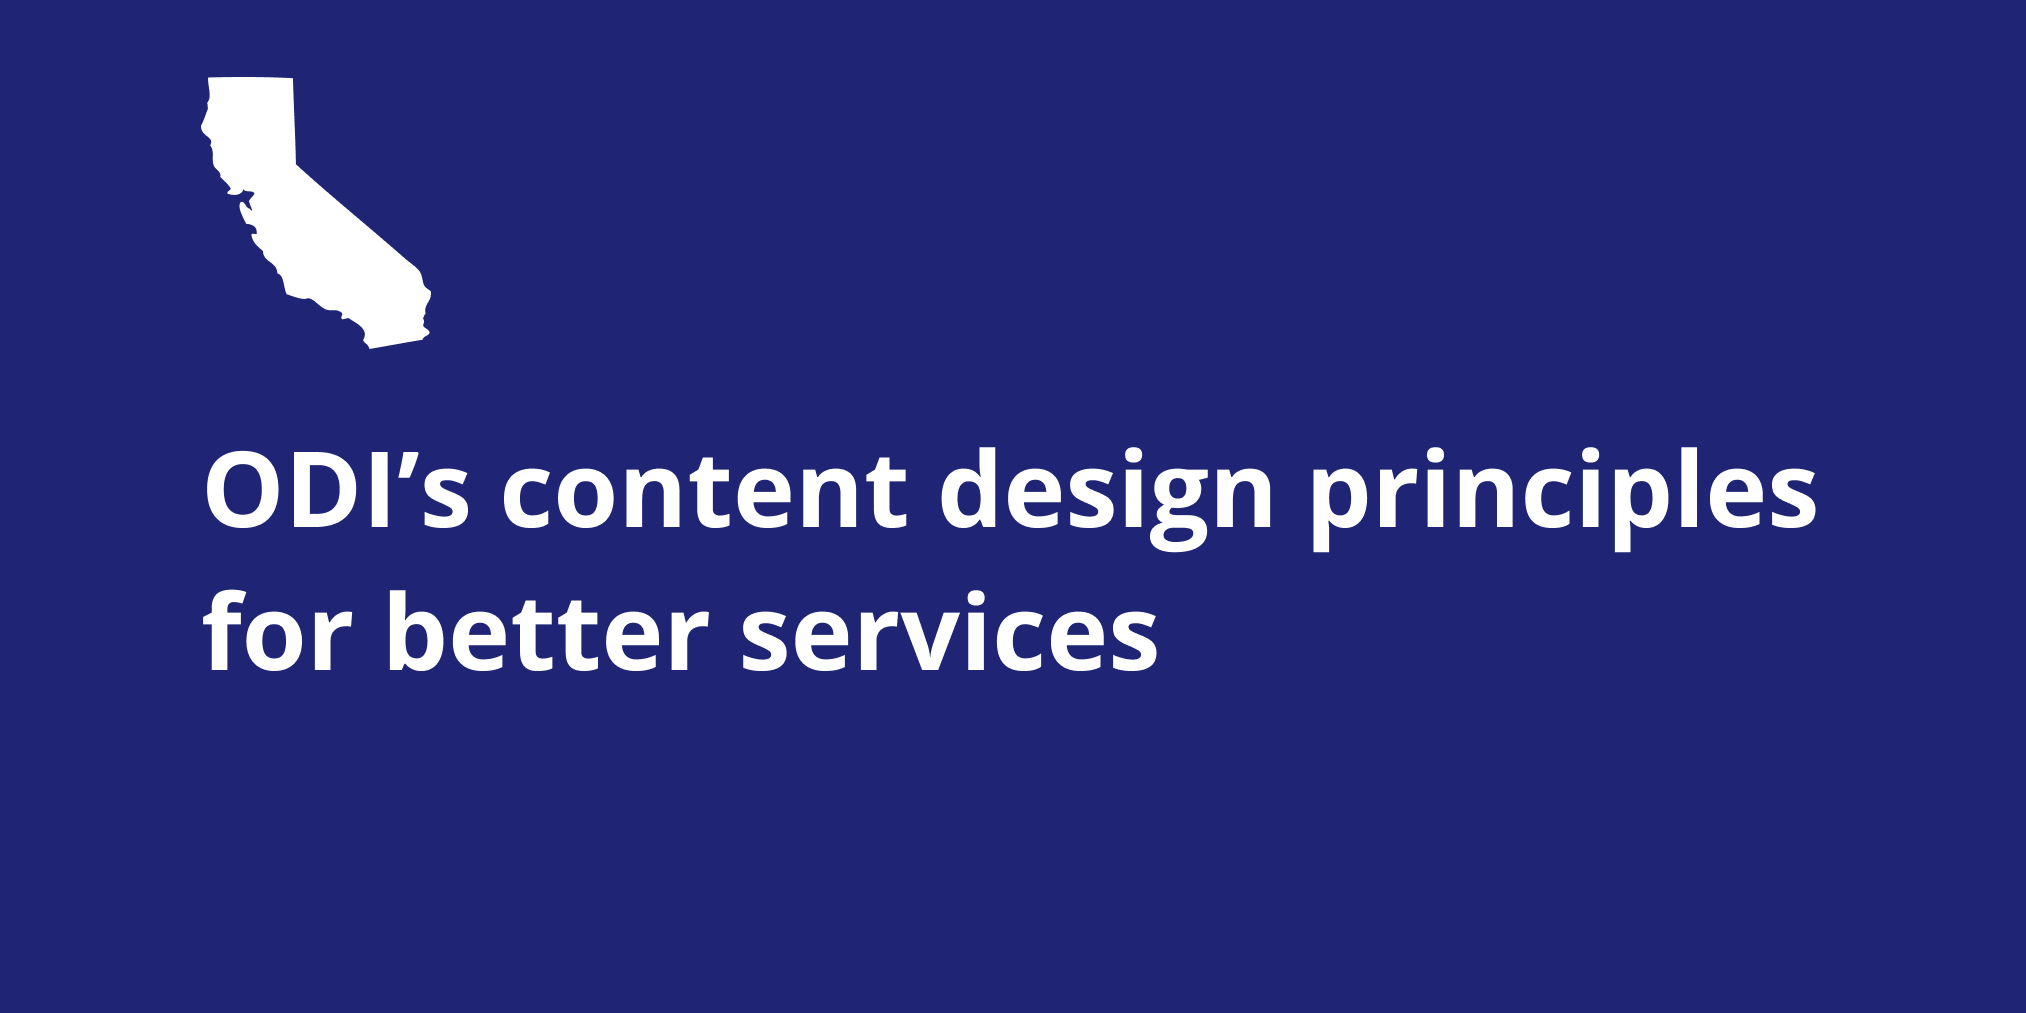 ODI’s content design principles for better services